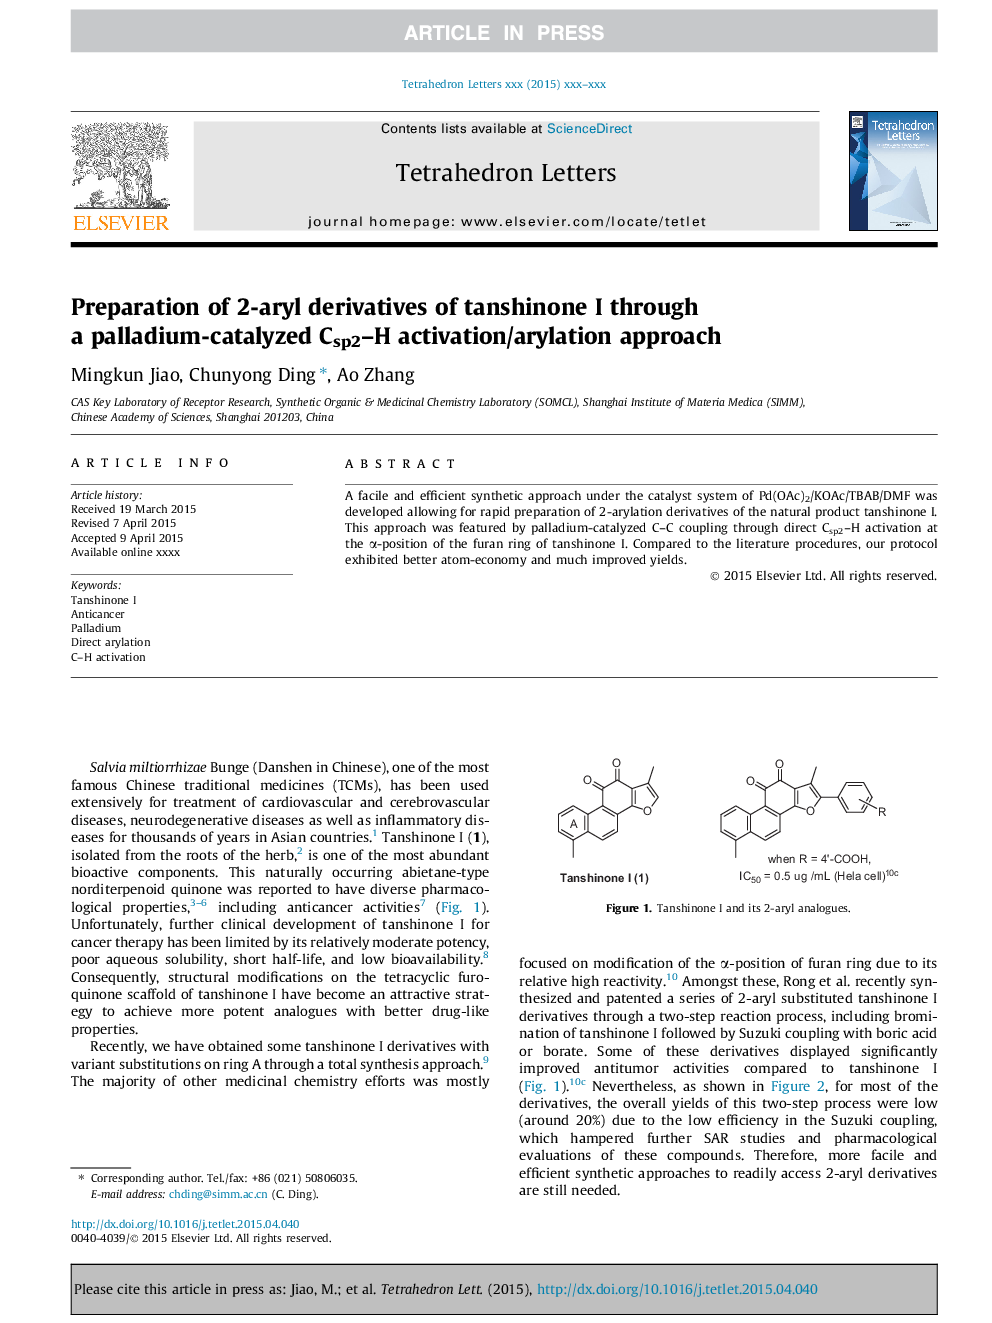 Preparation of 2-aryl derivatives of tanshinone I through a palladium-catalyzed Csp2-H activation/arylation approach